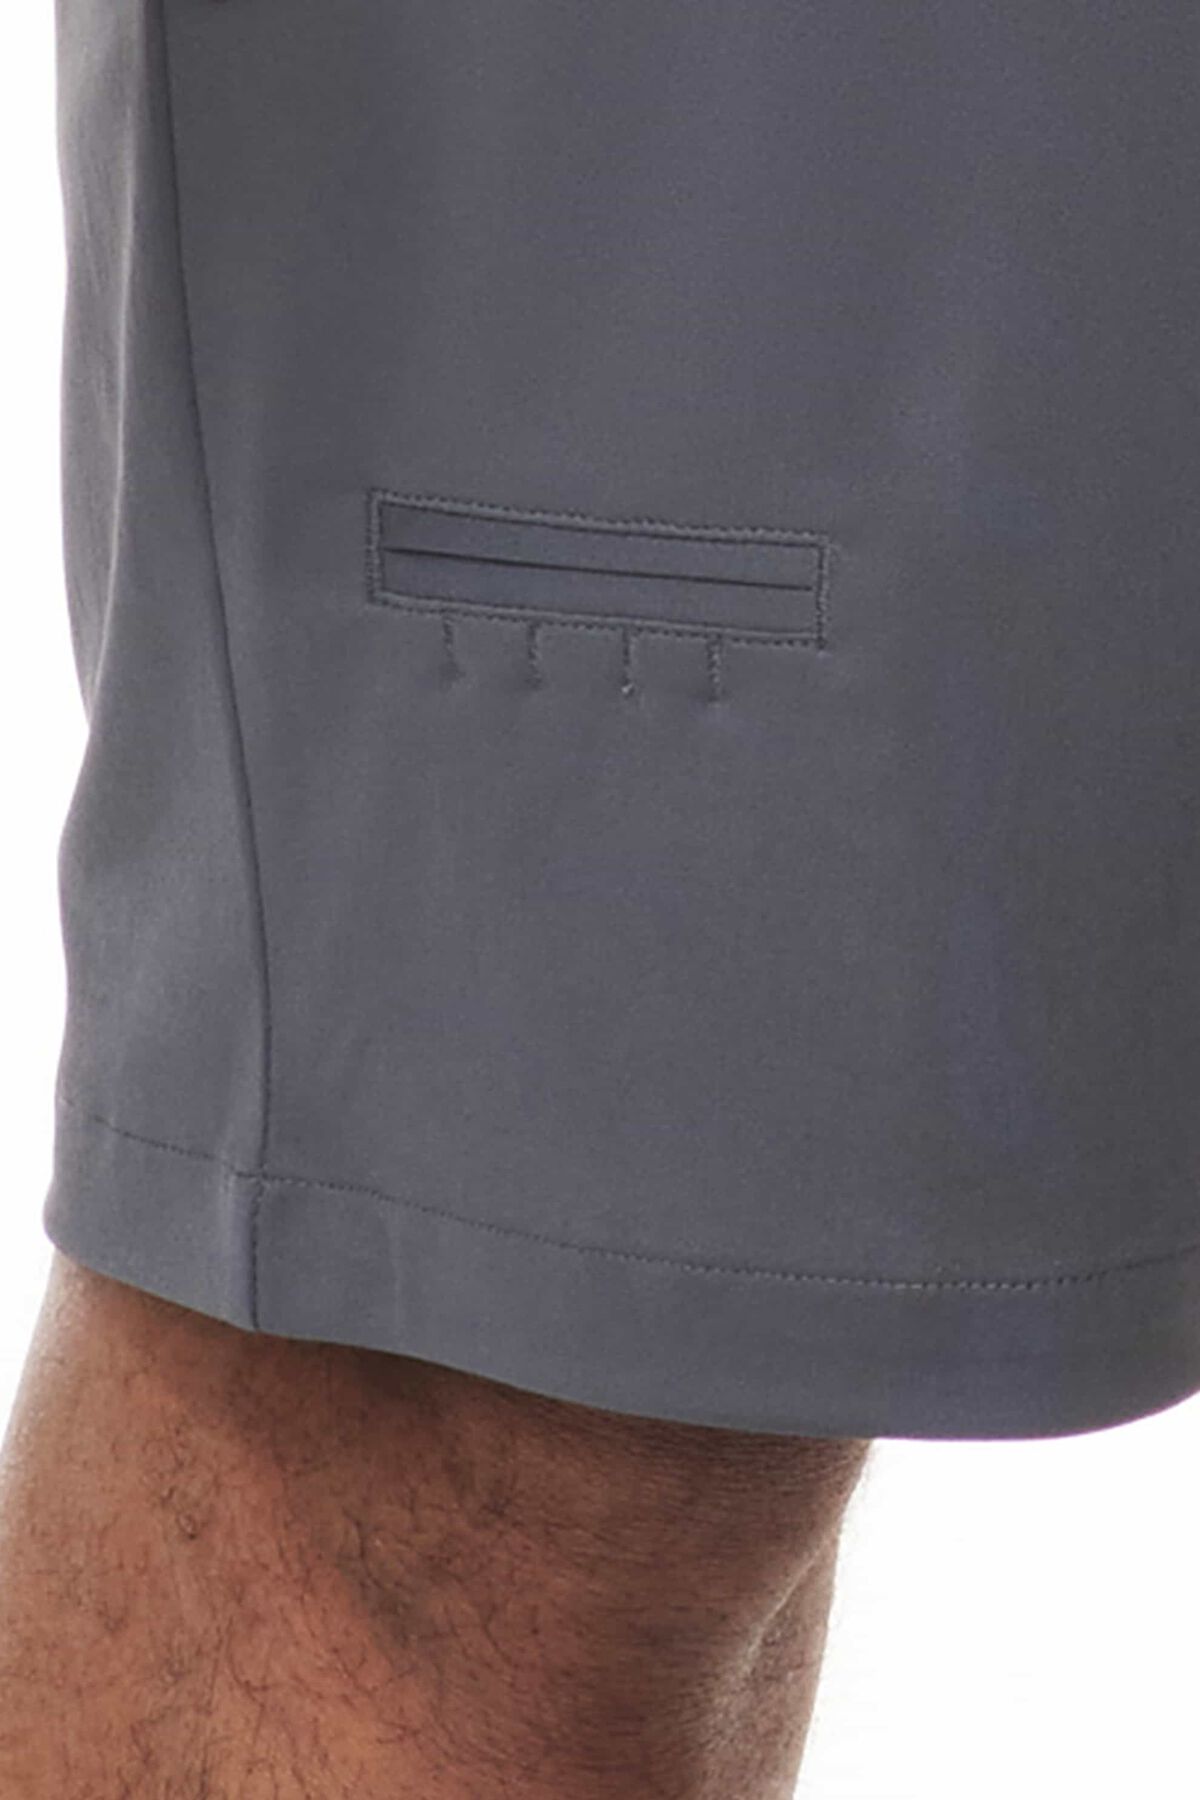 Saguaro Comfort Shorts 